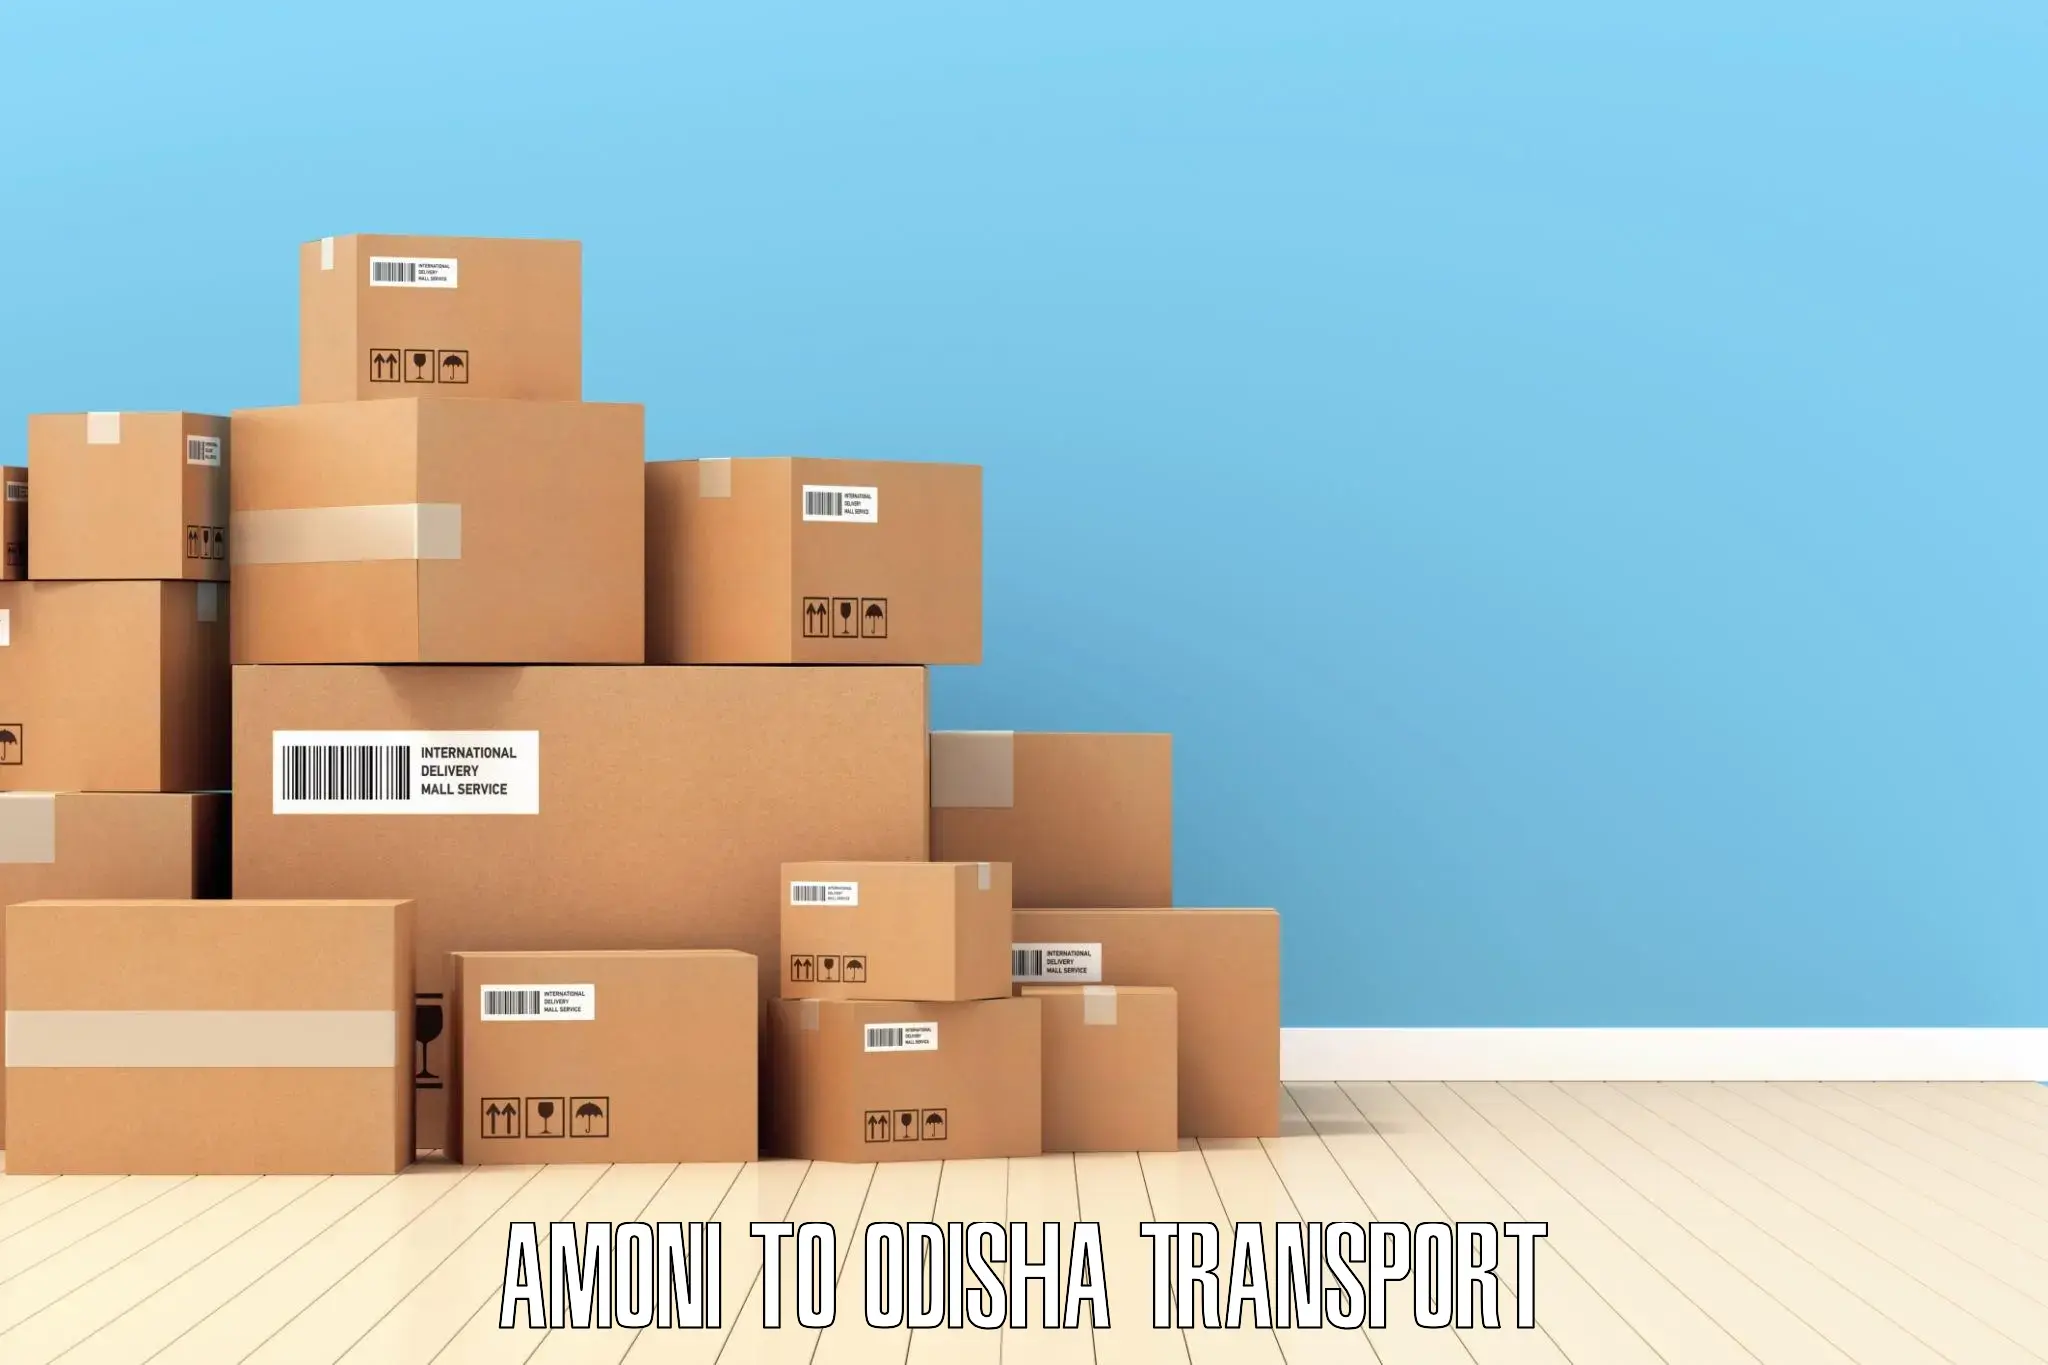 Transport shared services Amoni to Sohela